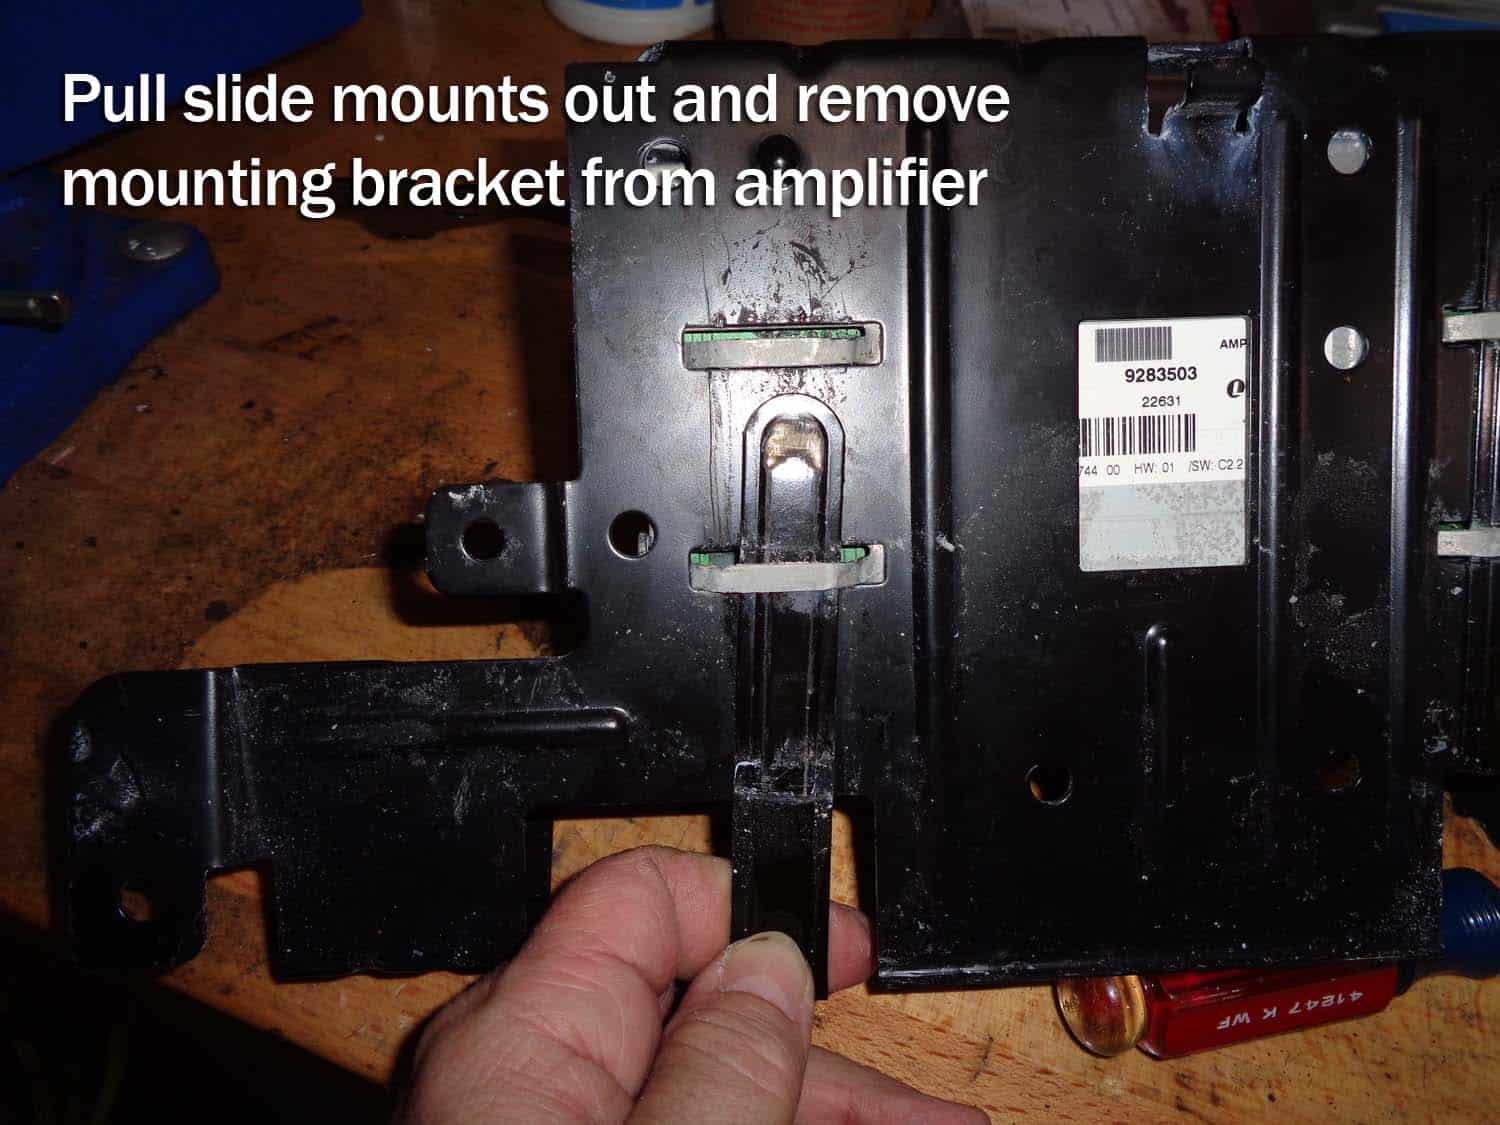 bmw e90 amplifier water damage repair - remove the slide mounts